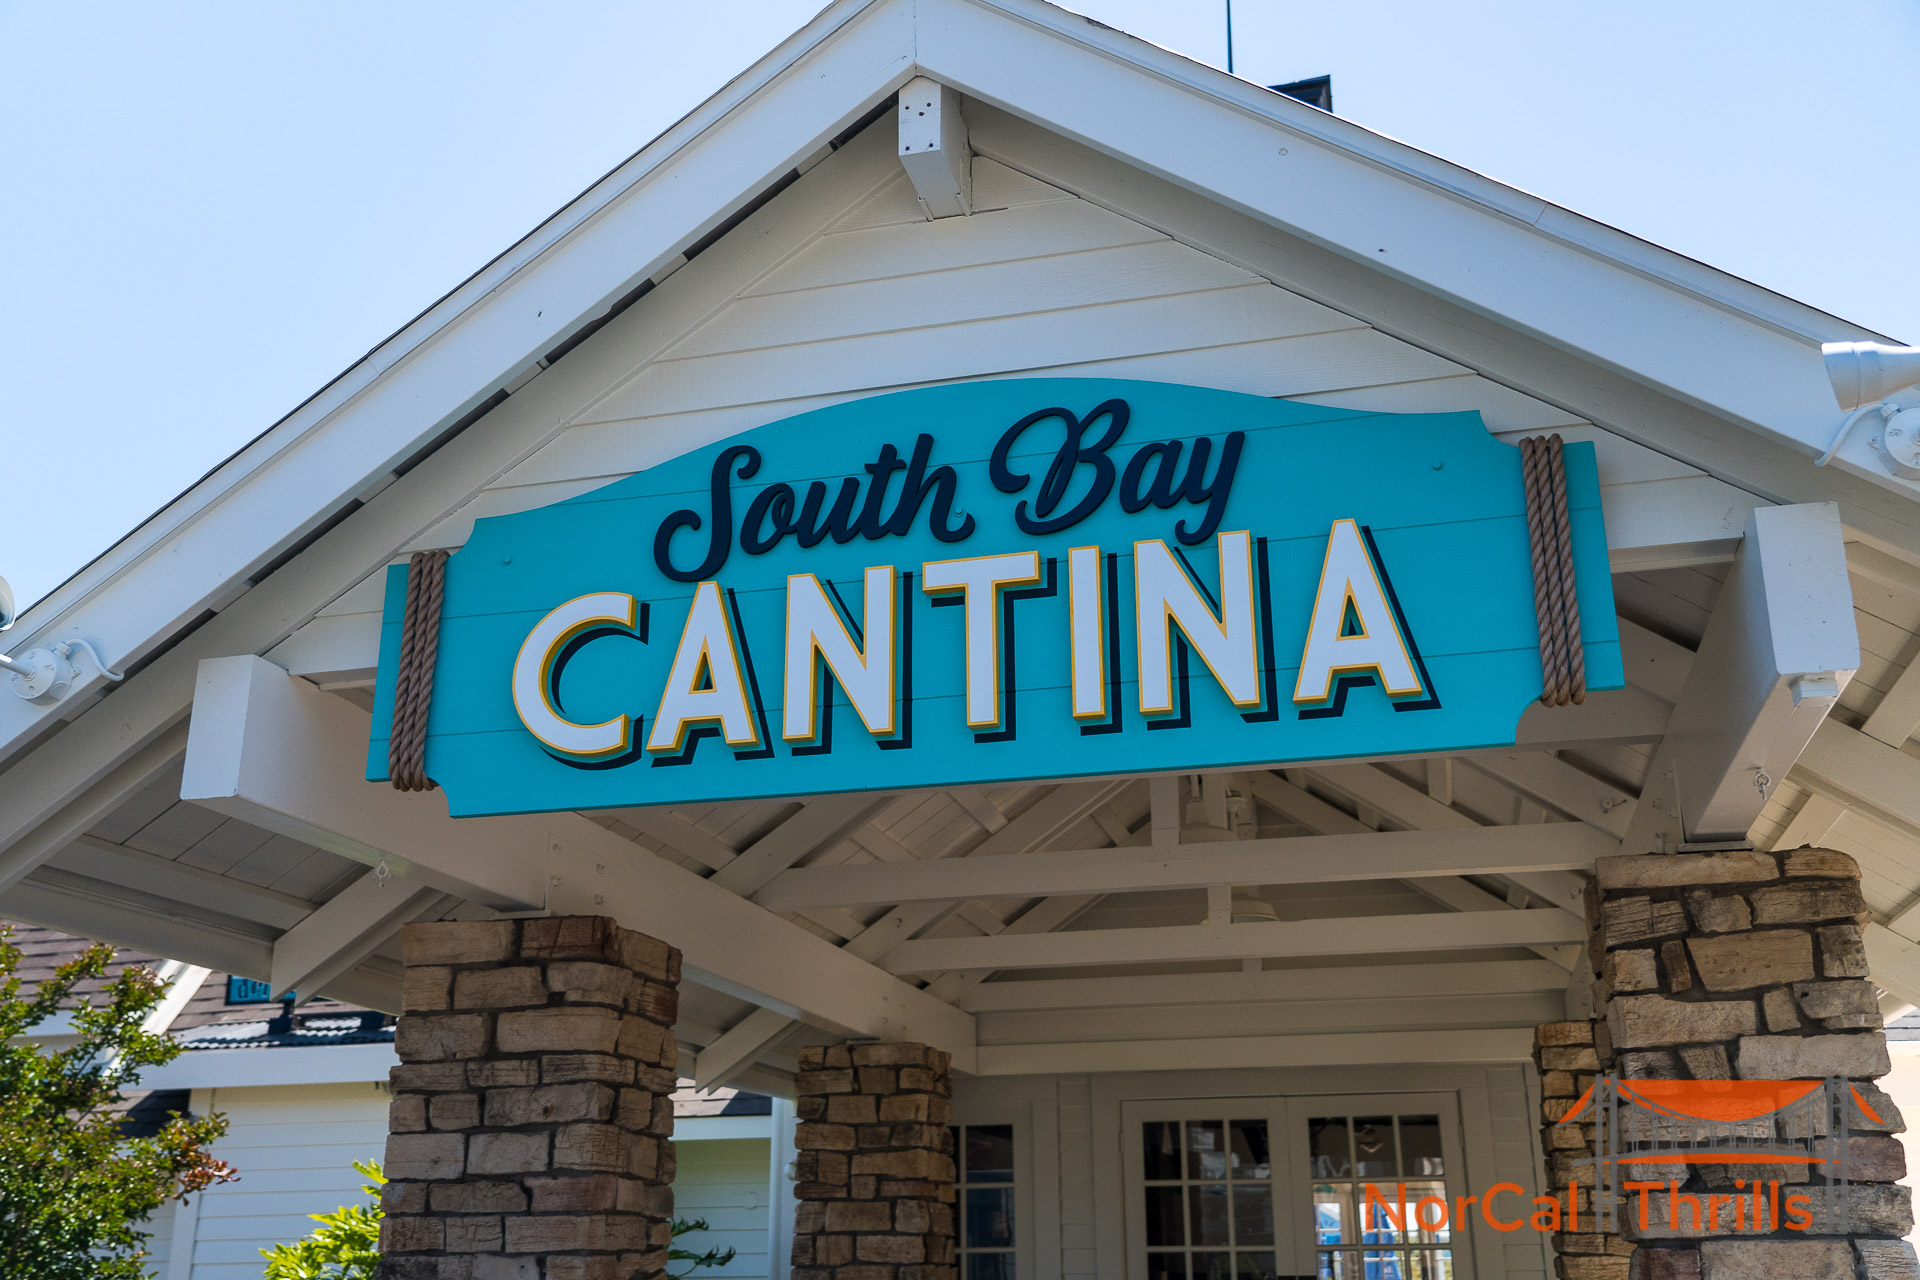 South Bay Cantina